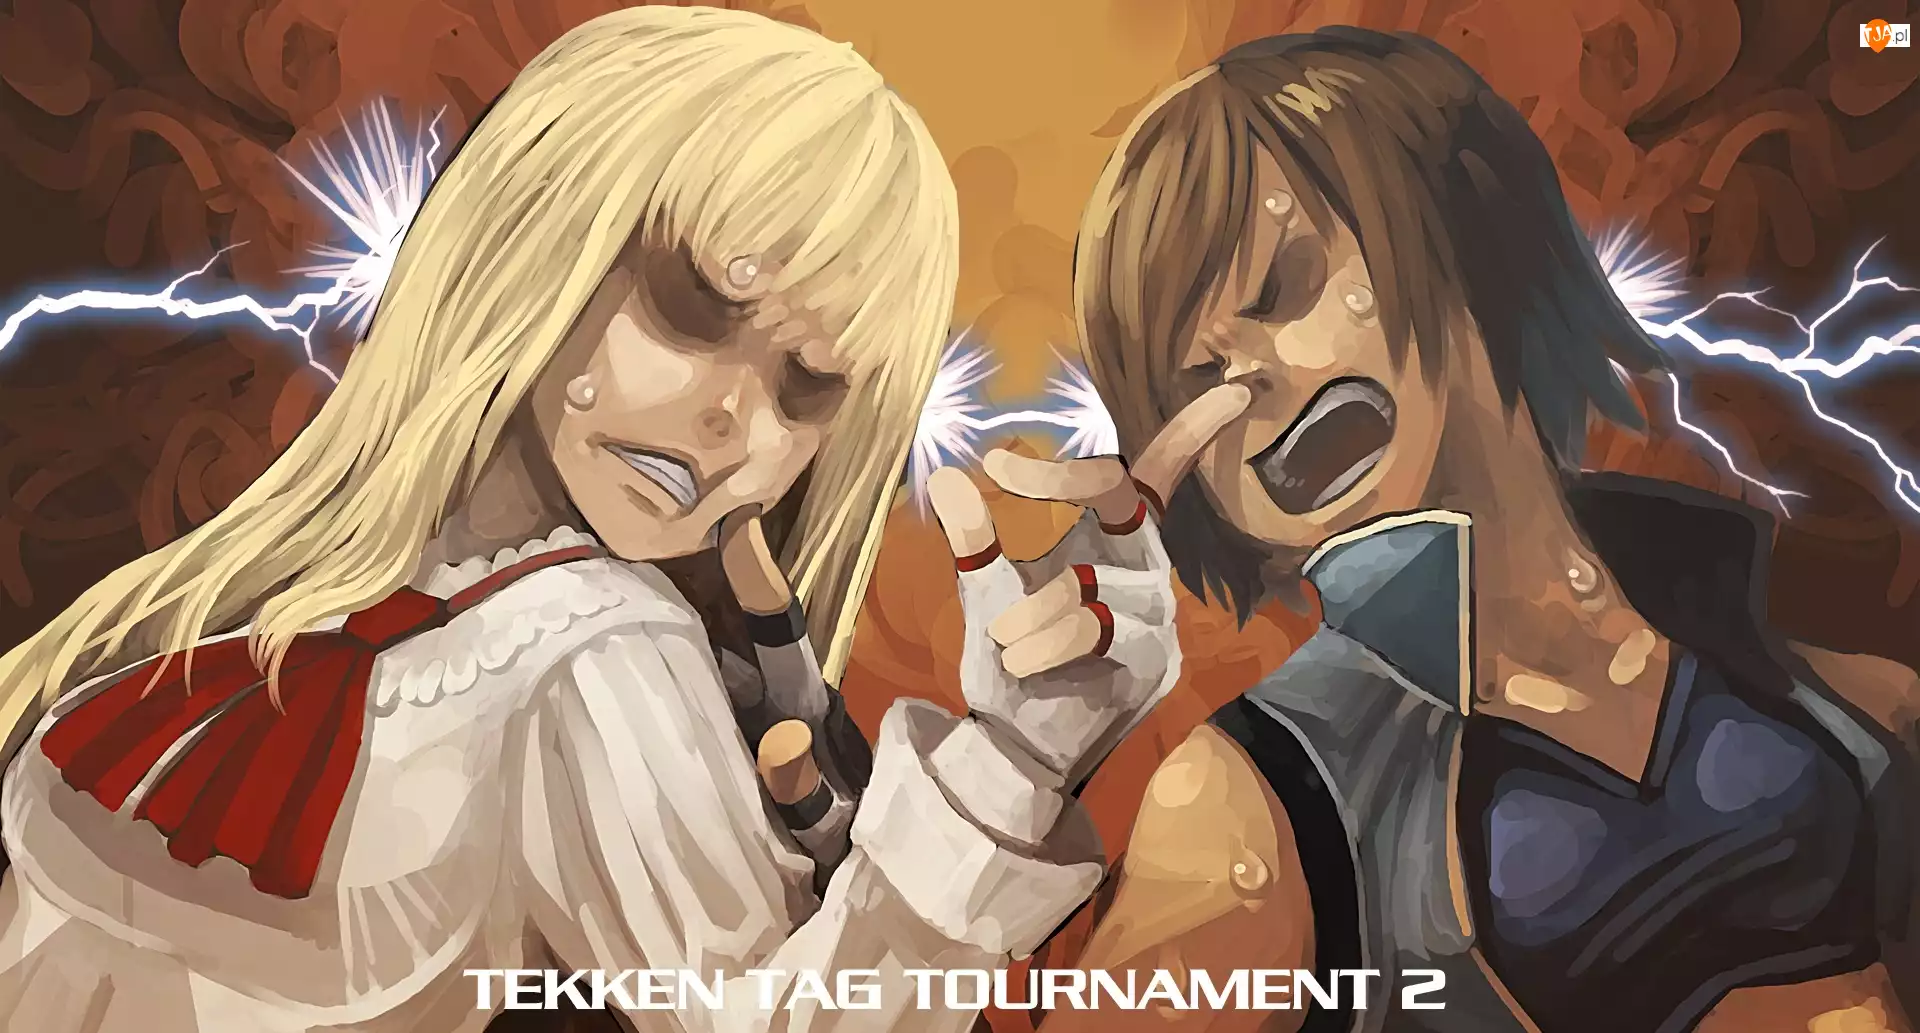 Asuka Kazama, Tag Tournament 2, Lili